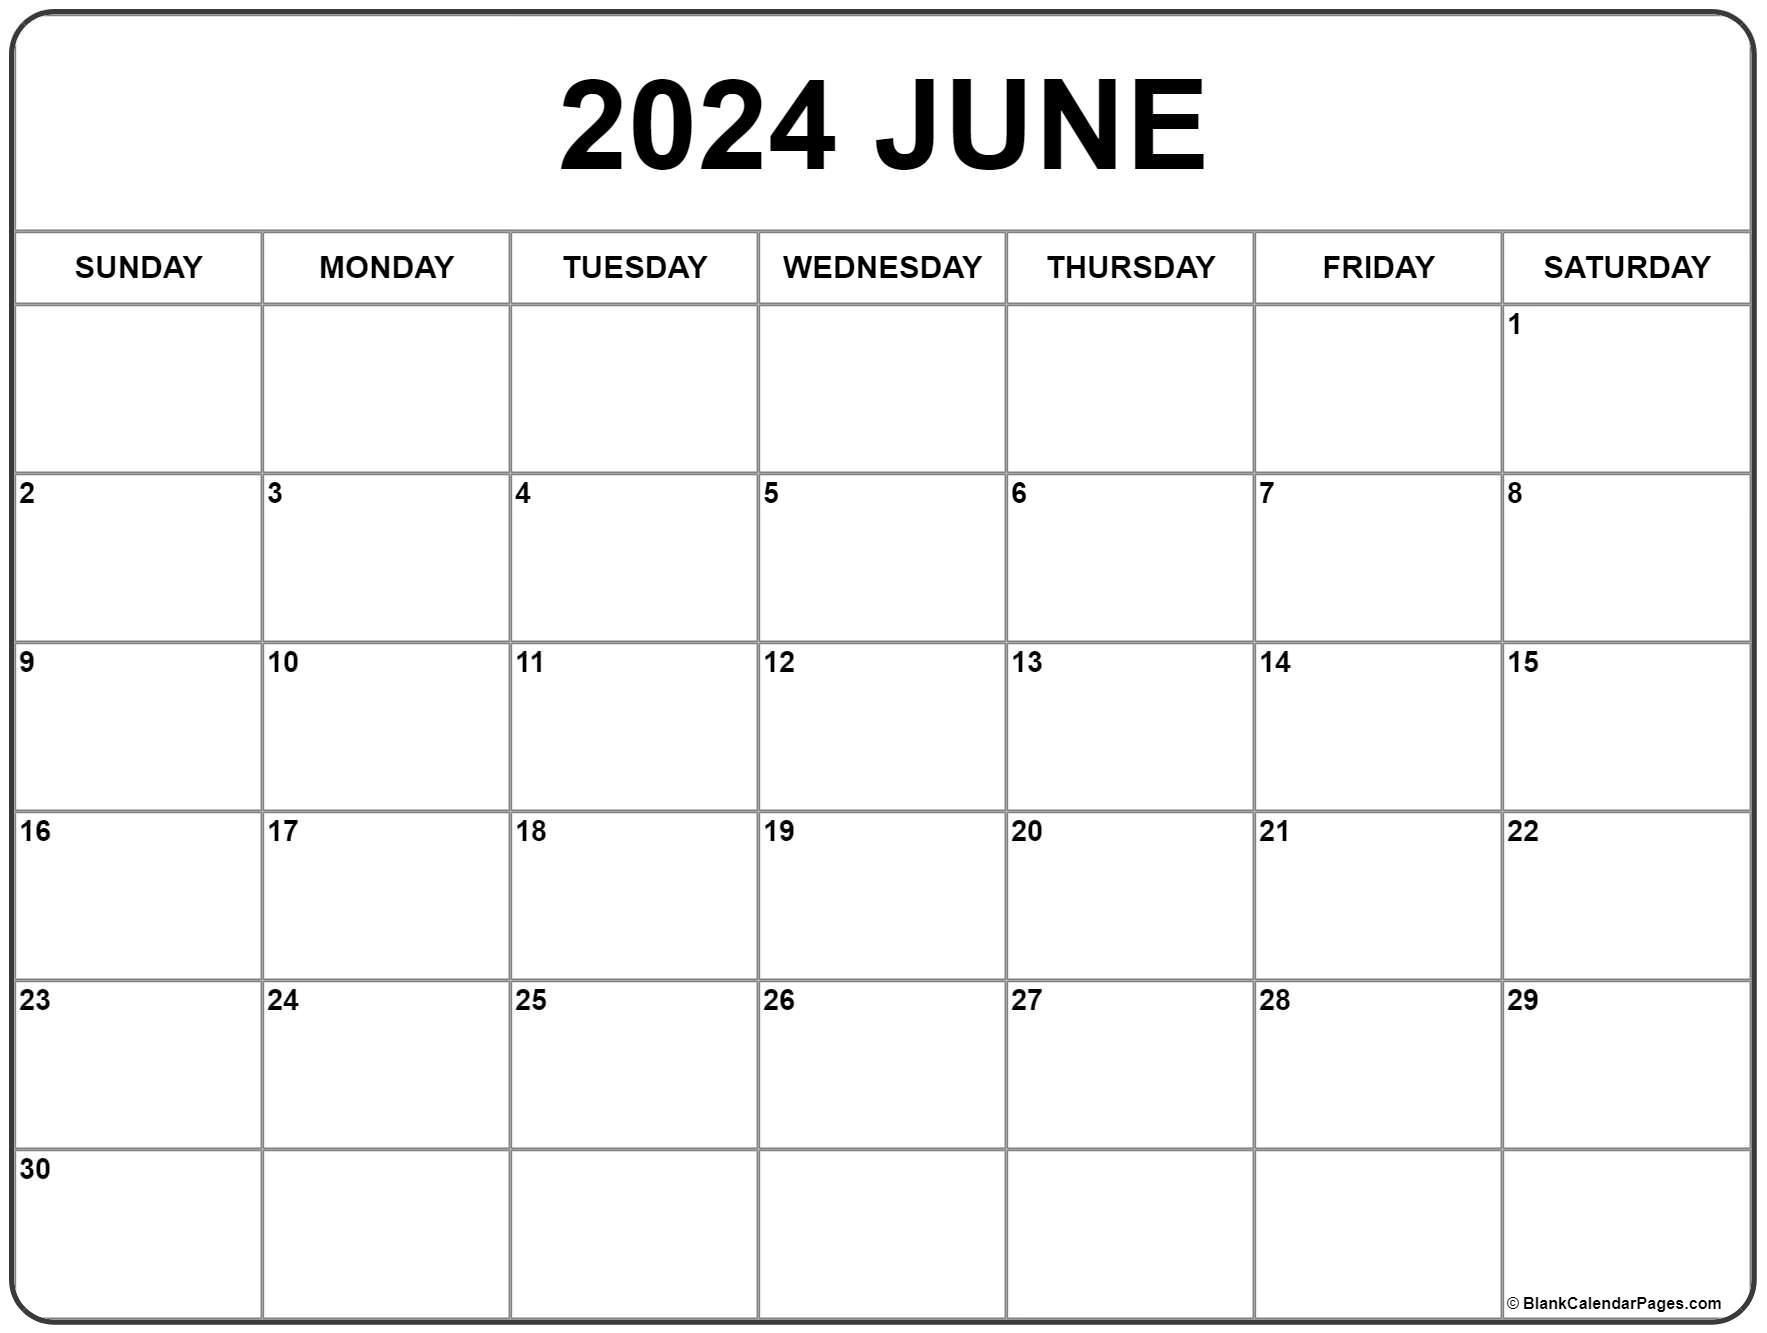 2021 June Calendar June 2021 calendar | free printable monthly calendars